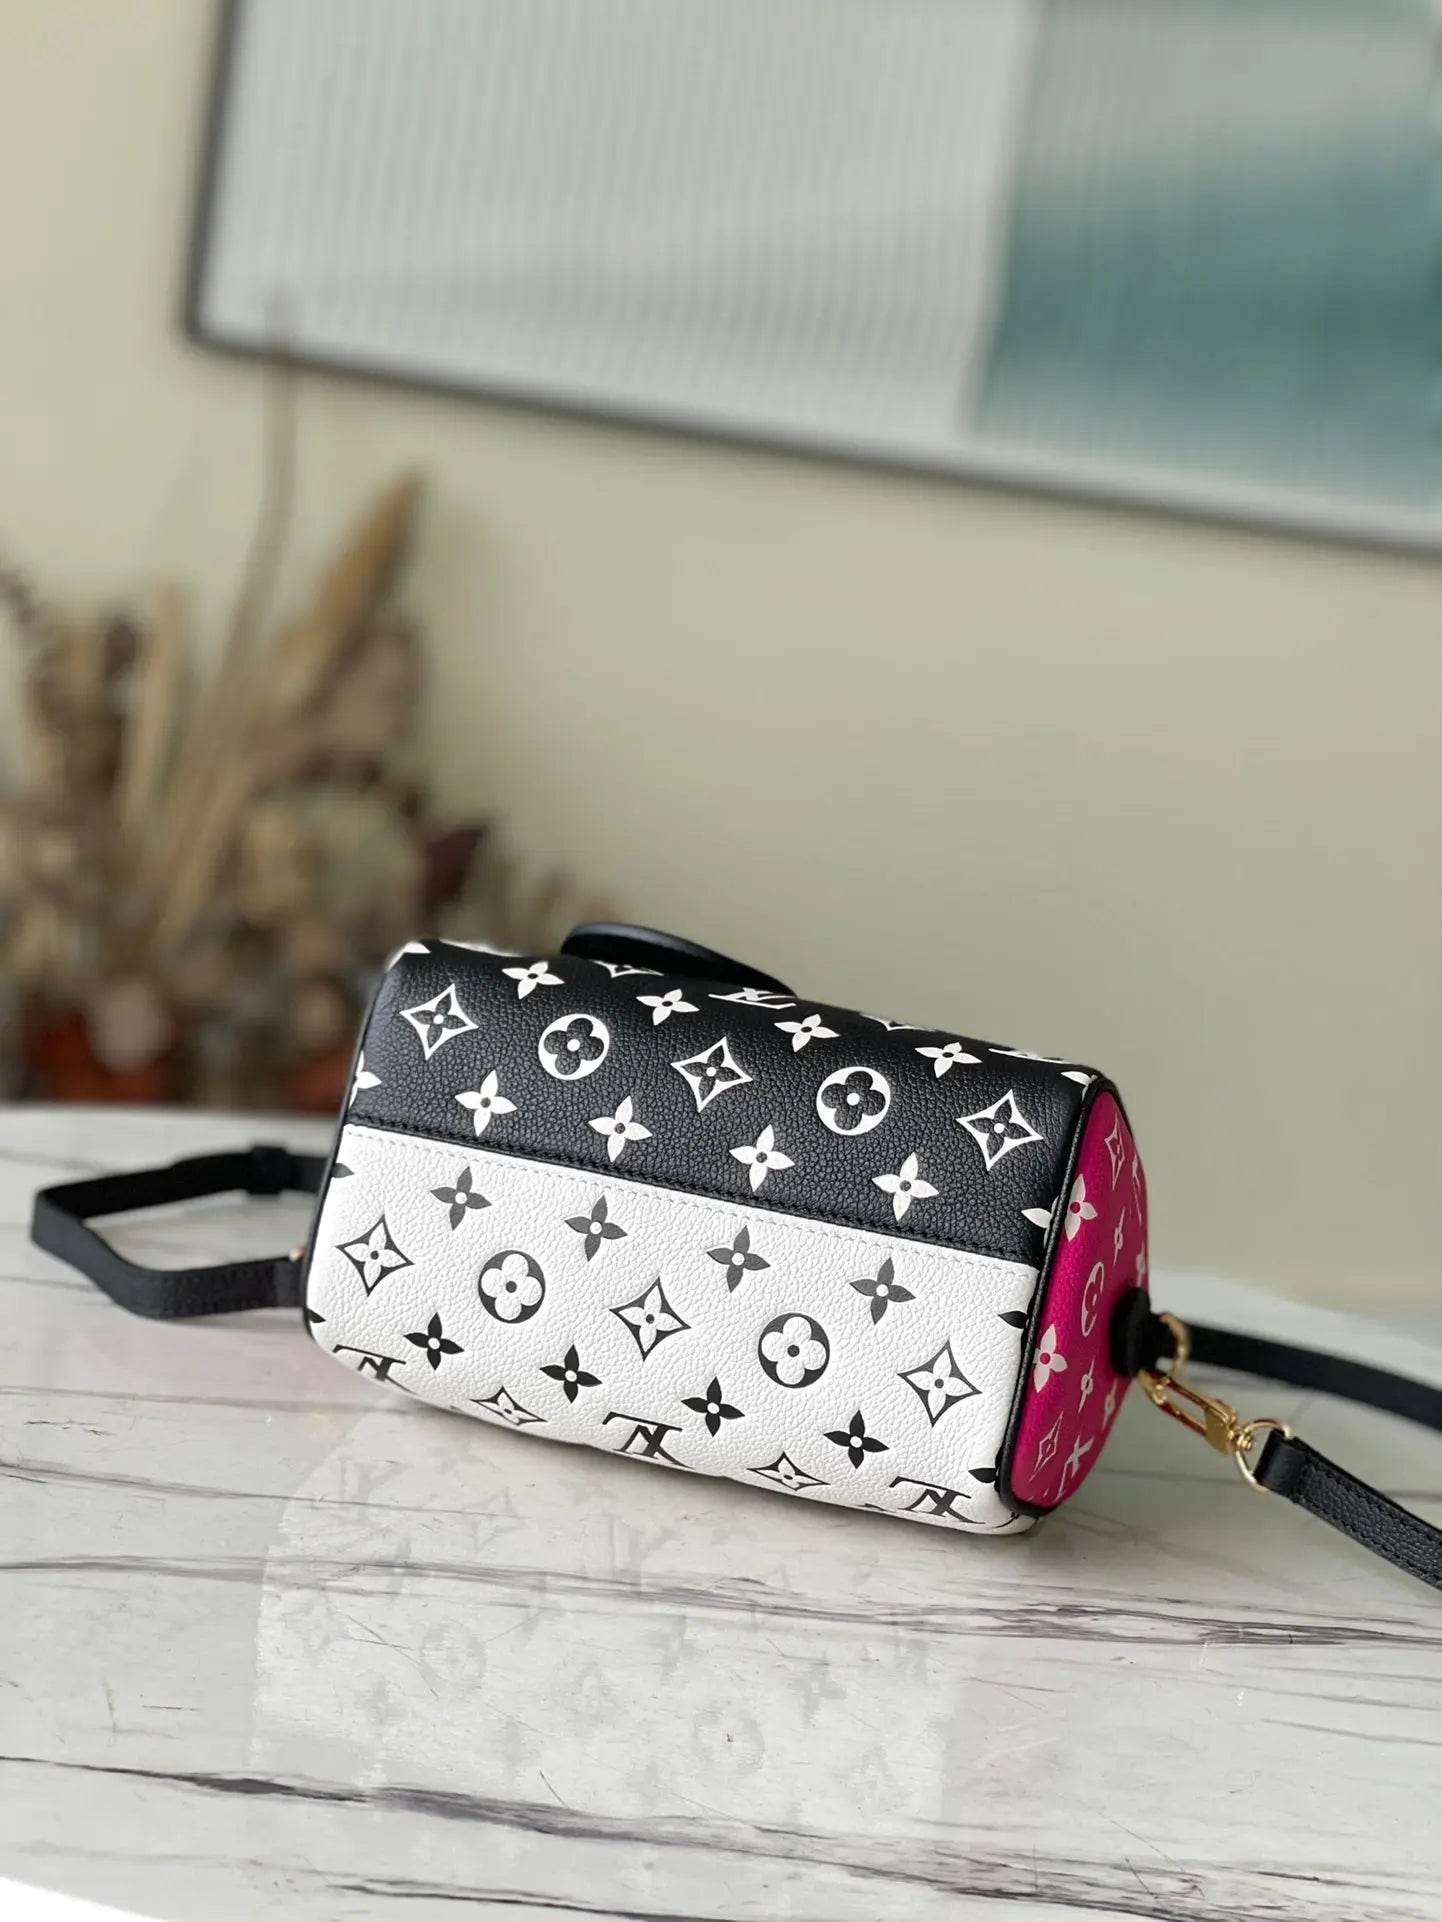 SO - New Fashion Women's Bags LUV SPEEDY MONOGRAM A017 sneakeronline